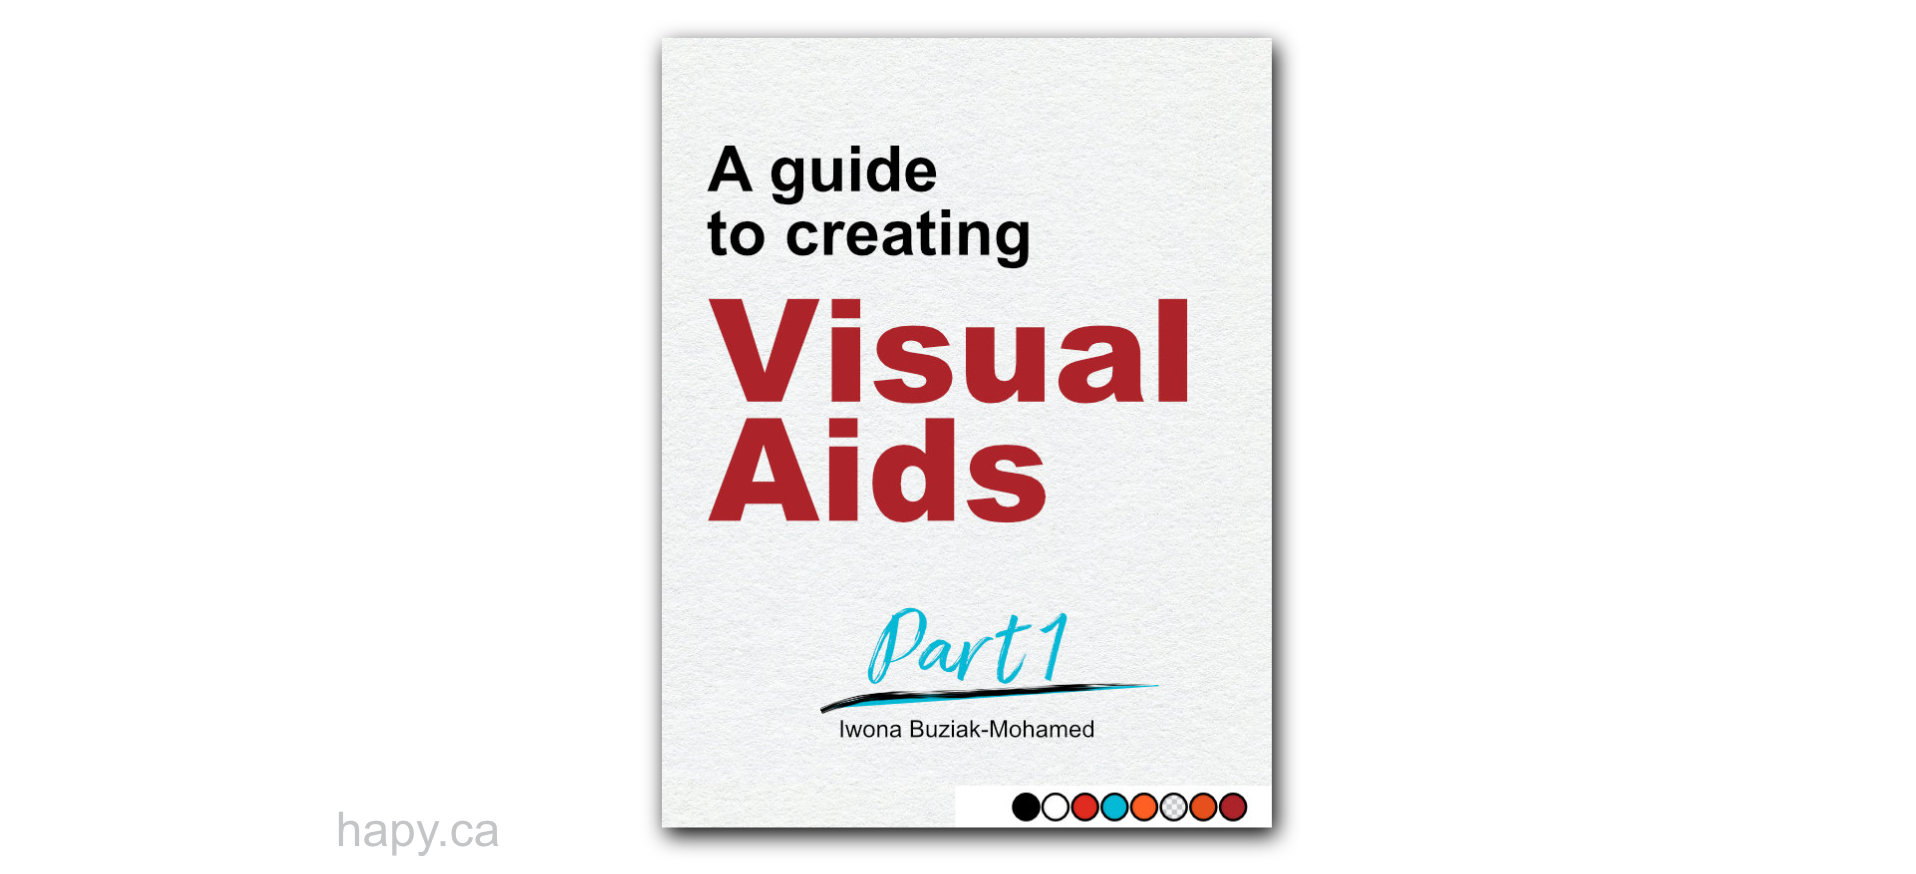 A guide to creating visual aids - hapy.ca - Iwona Buziak